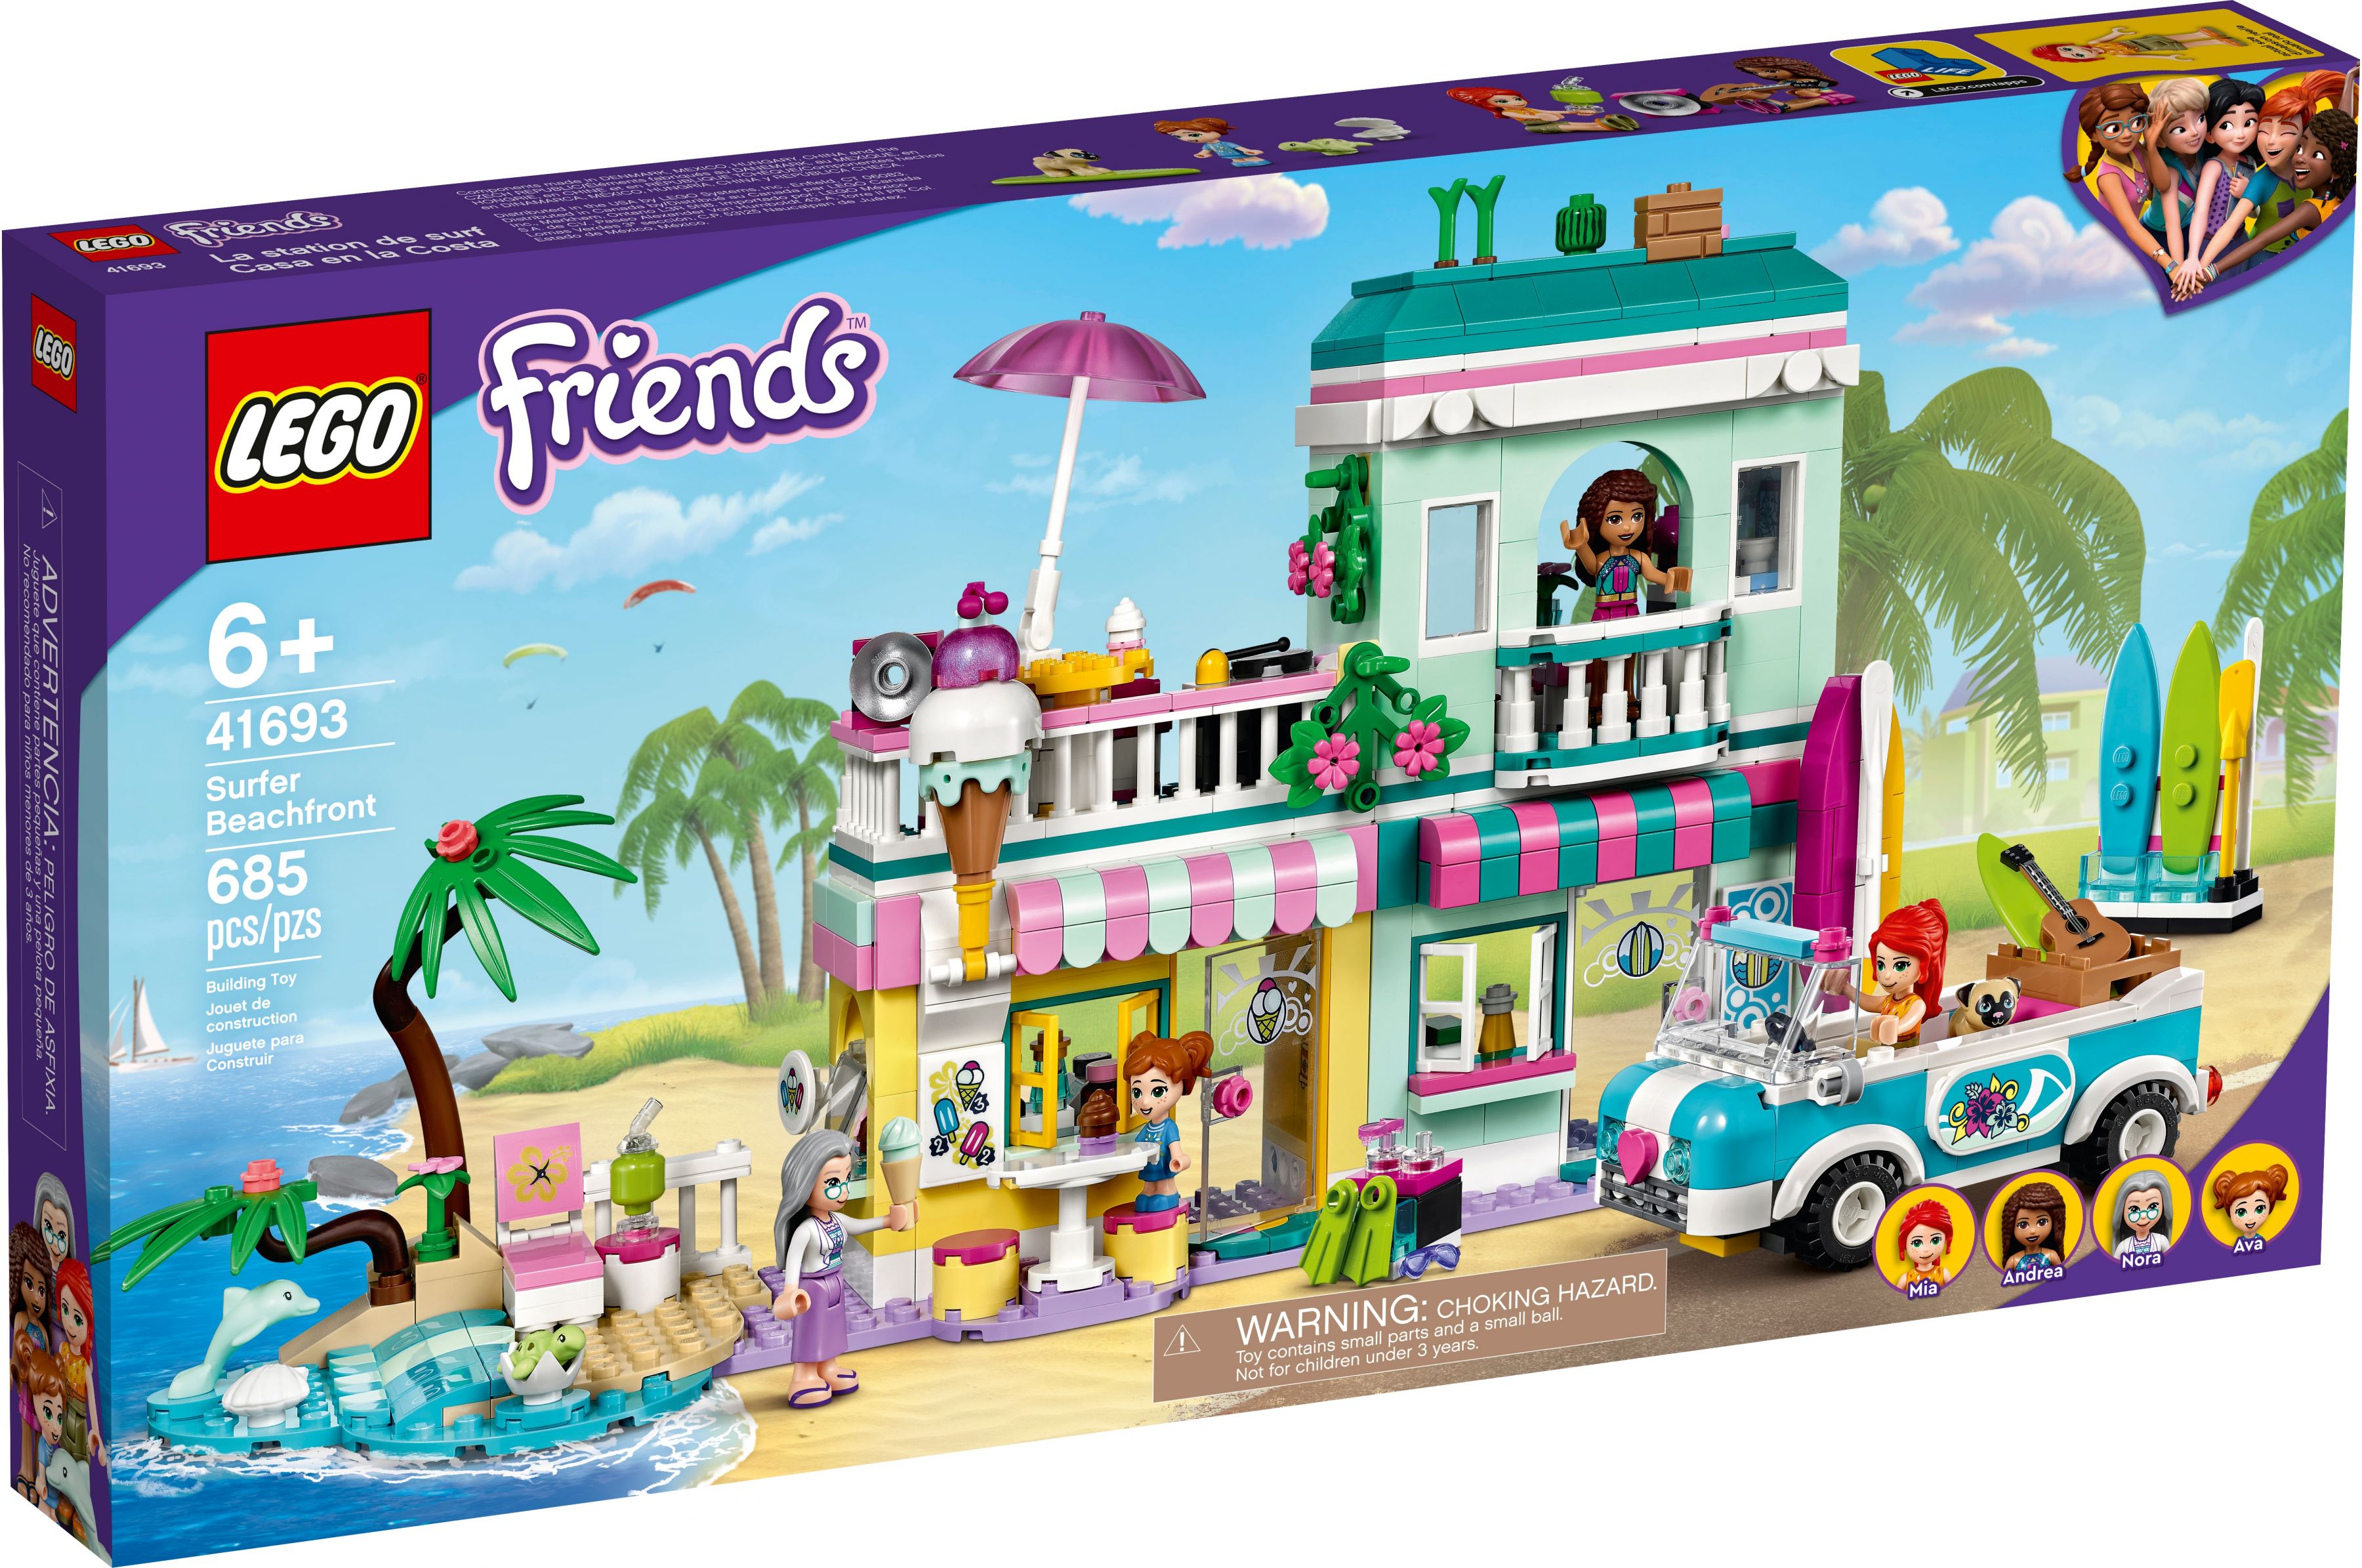 LEGO Friends 41693 Surfer-Strandhaus LEGO_41693_alt1.jpg